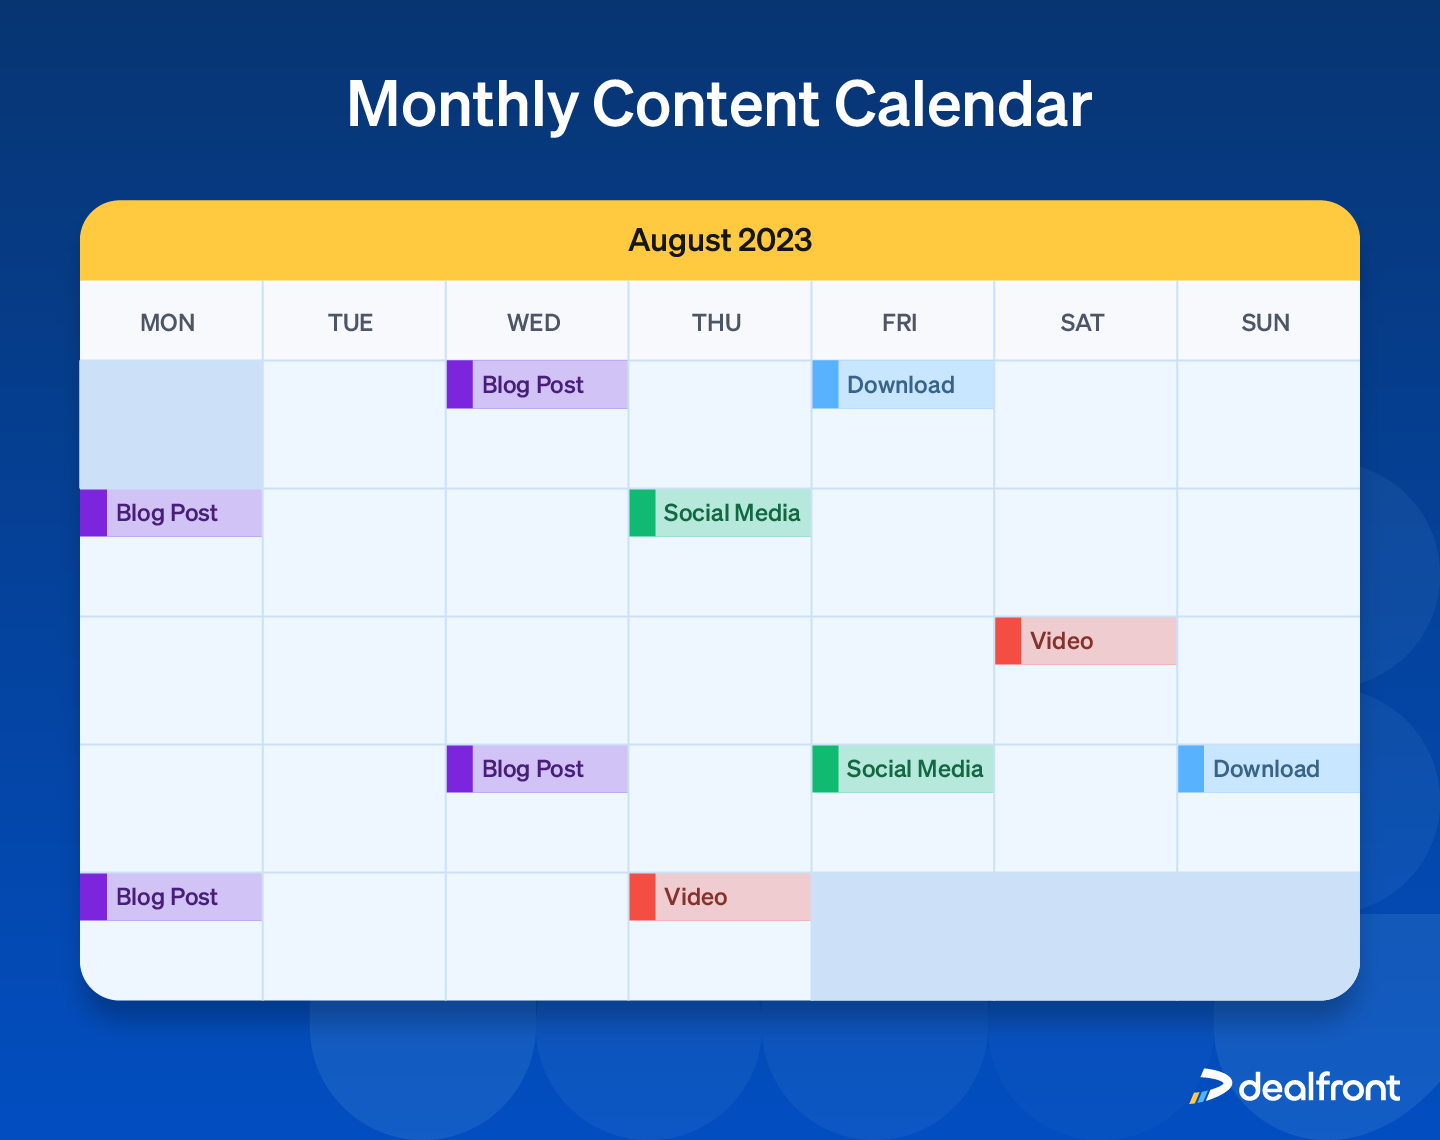 Content calendar